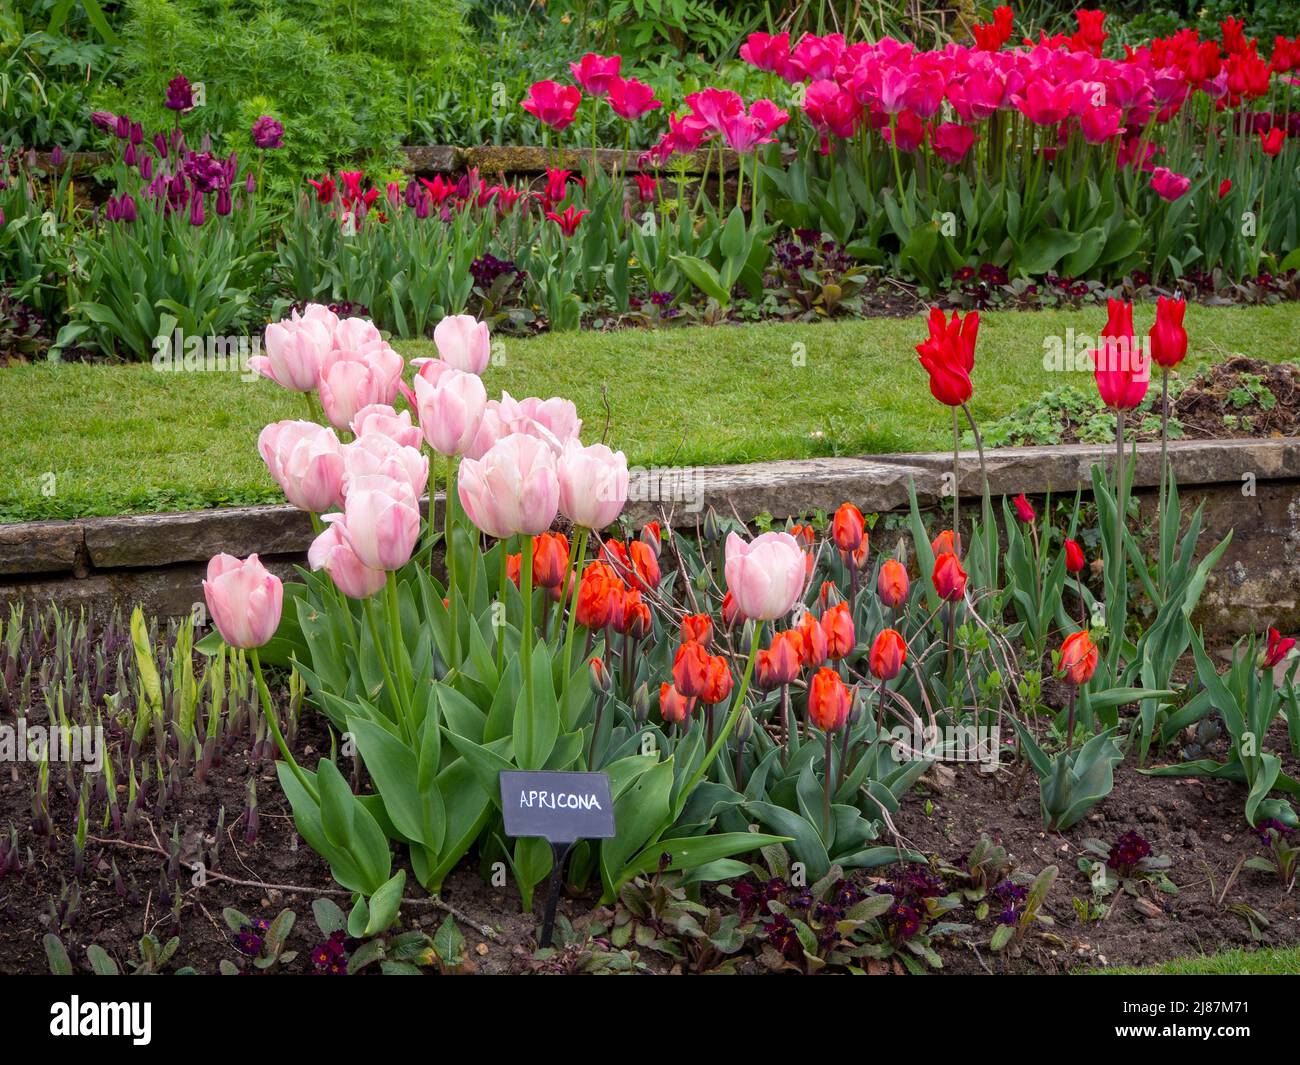 Chenies Manor Garden.der terrassenförmige, versunkene Garten mit bunten Tulpenschichten..Tulipa 'Apricona', Tulipa 'Hermitage', Tulipa 'Barcelona'. Stockfoto